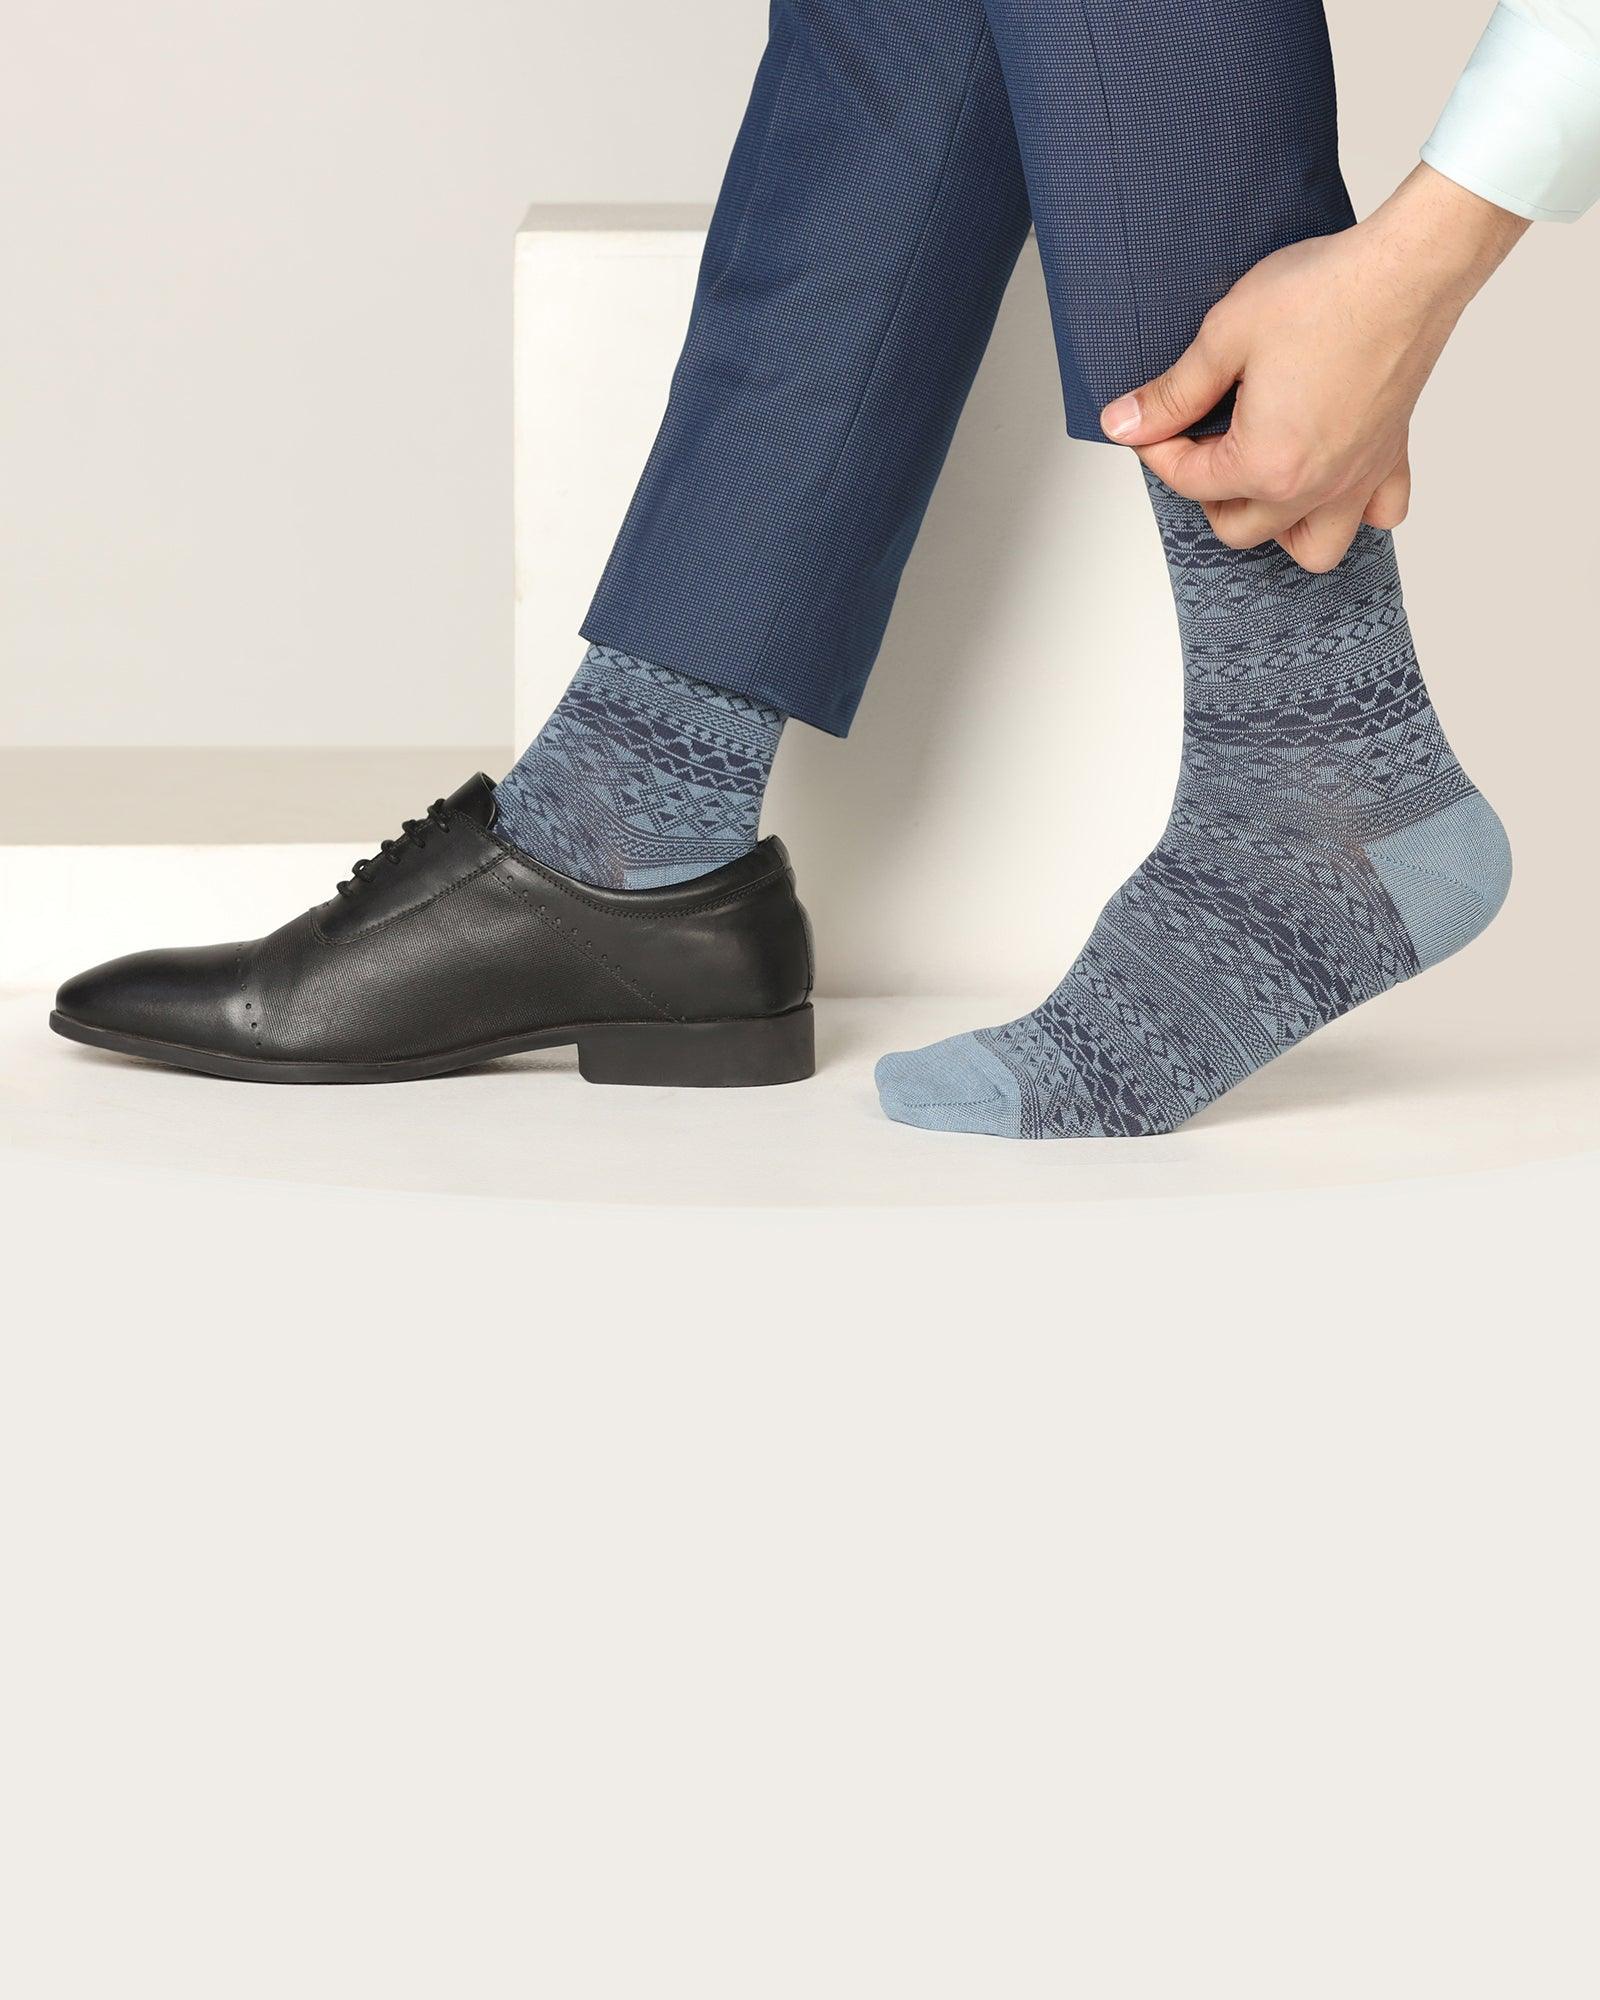 Cotton Blue Solid Socks Picadia